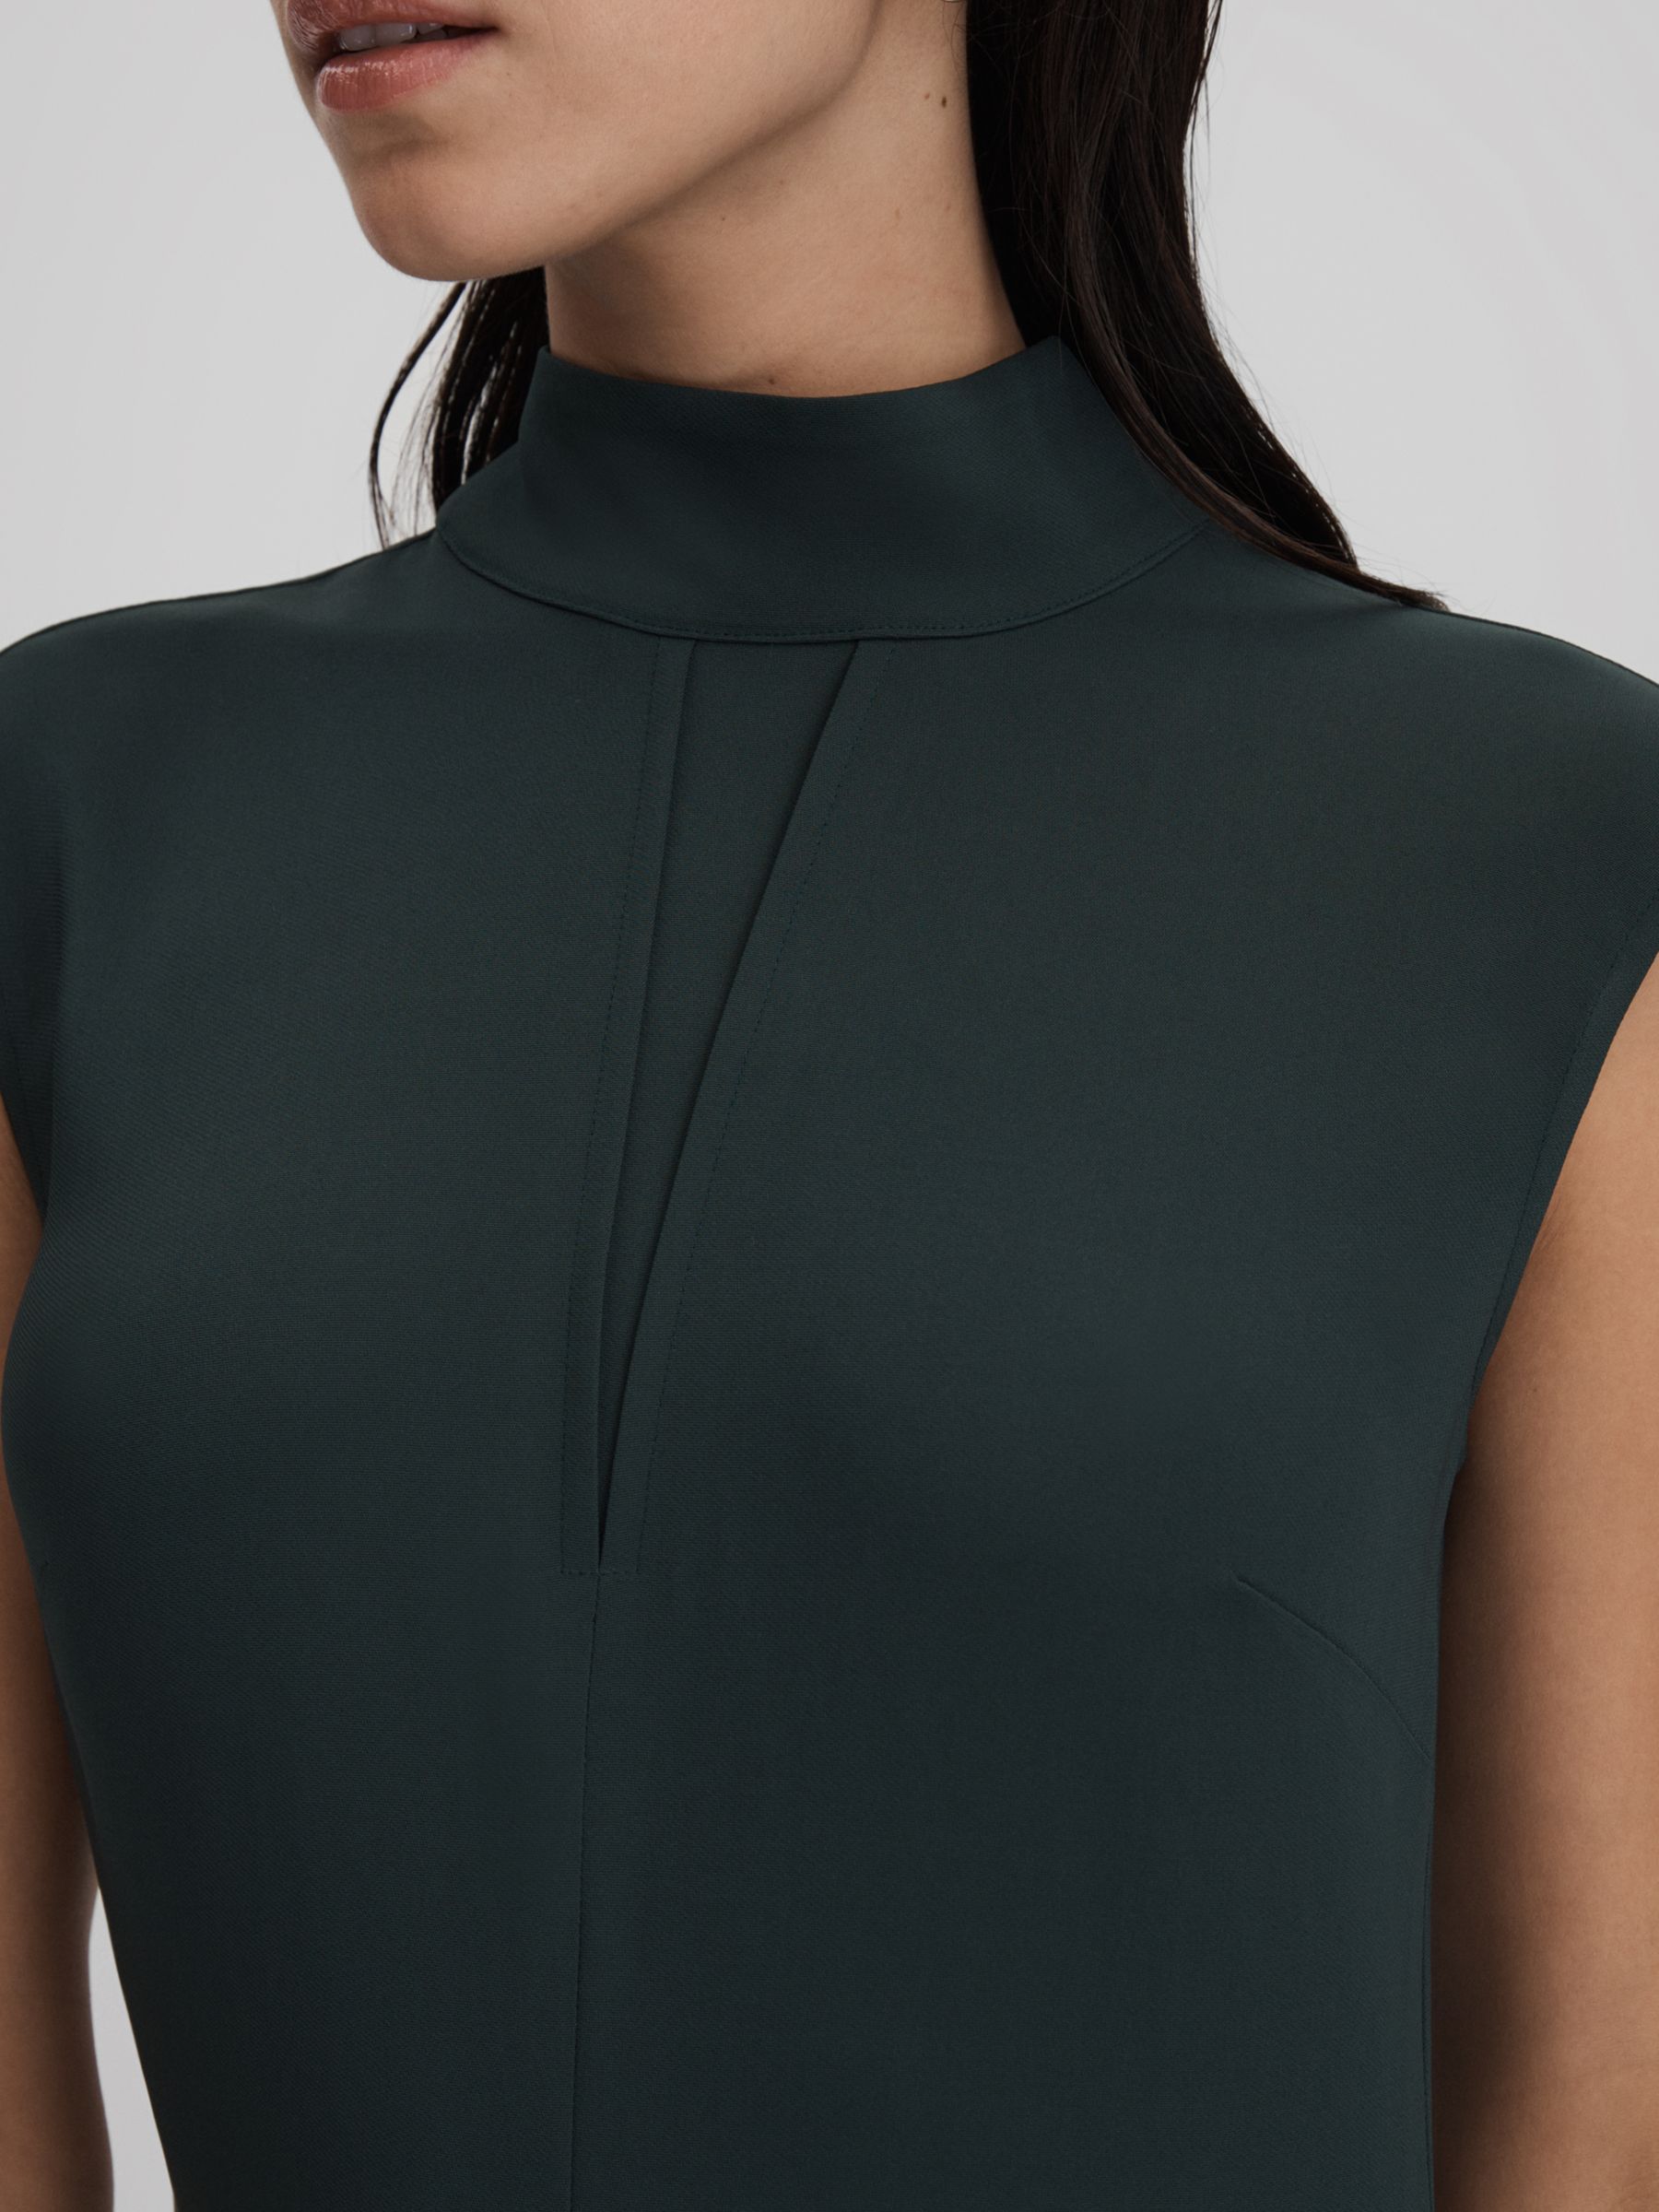 Reiss Libby Occasion Midi Dress, Dark Green at John Lewis & Partners